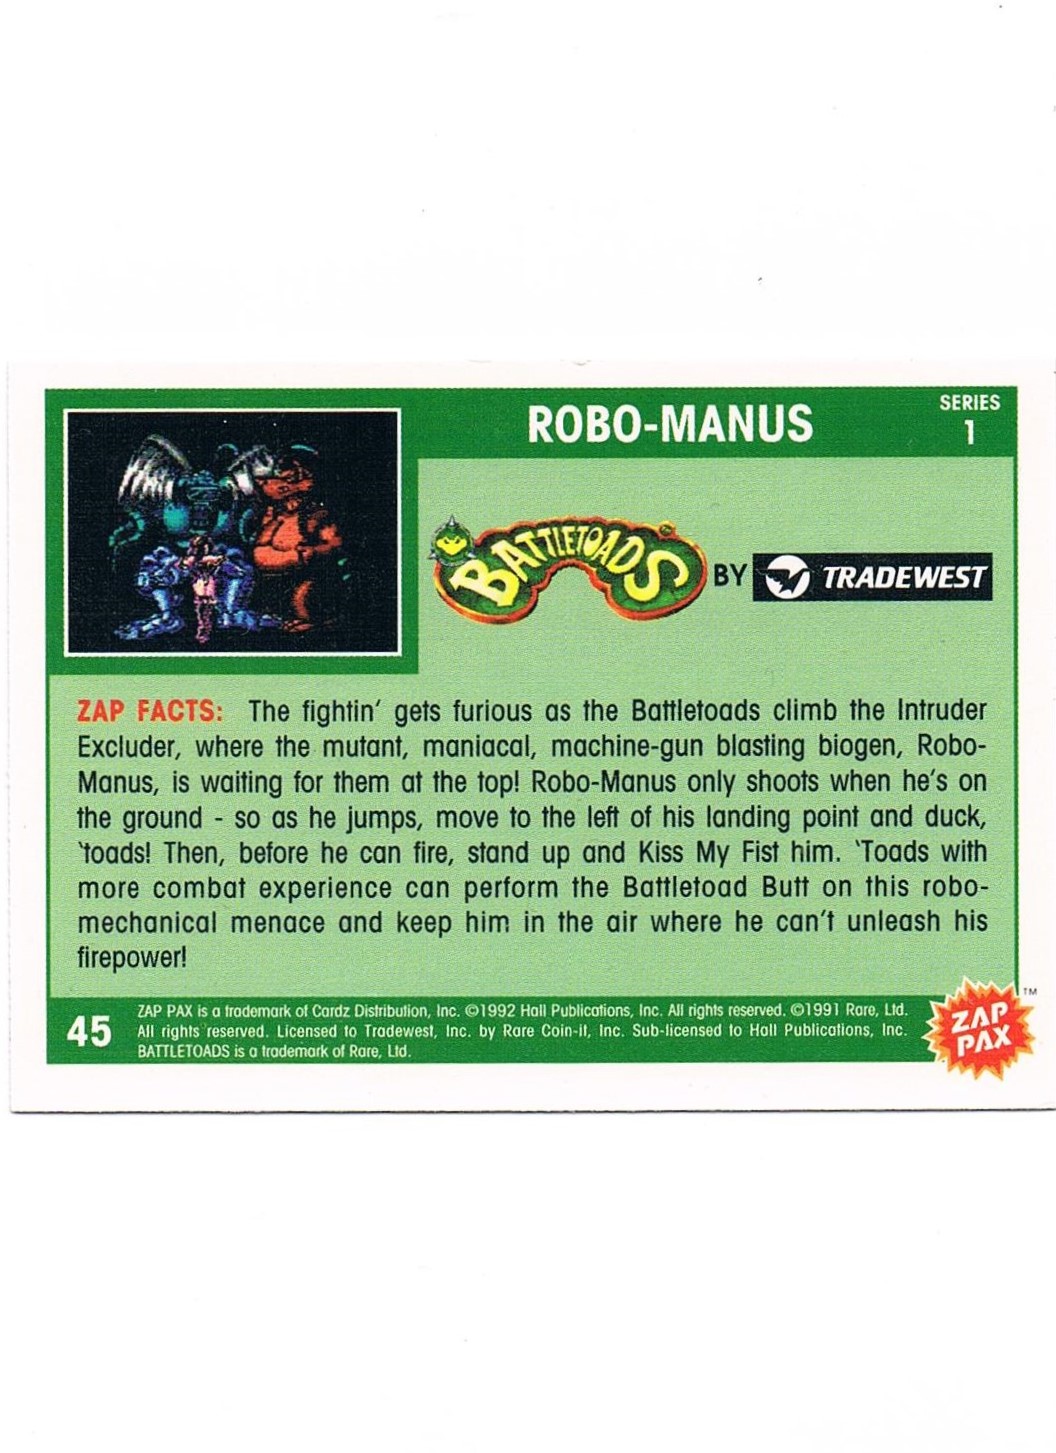 Zap Pax No. 45 - Battletoads Robo-Manus 2